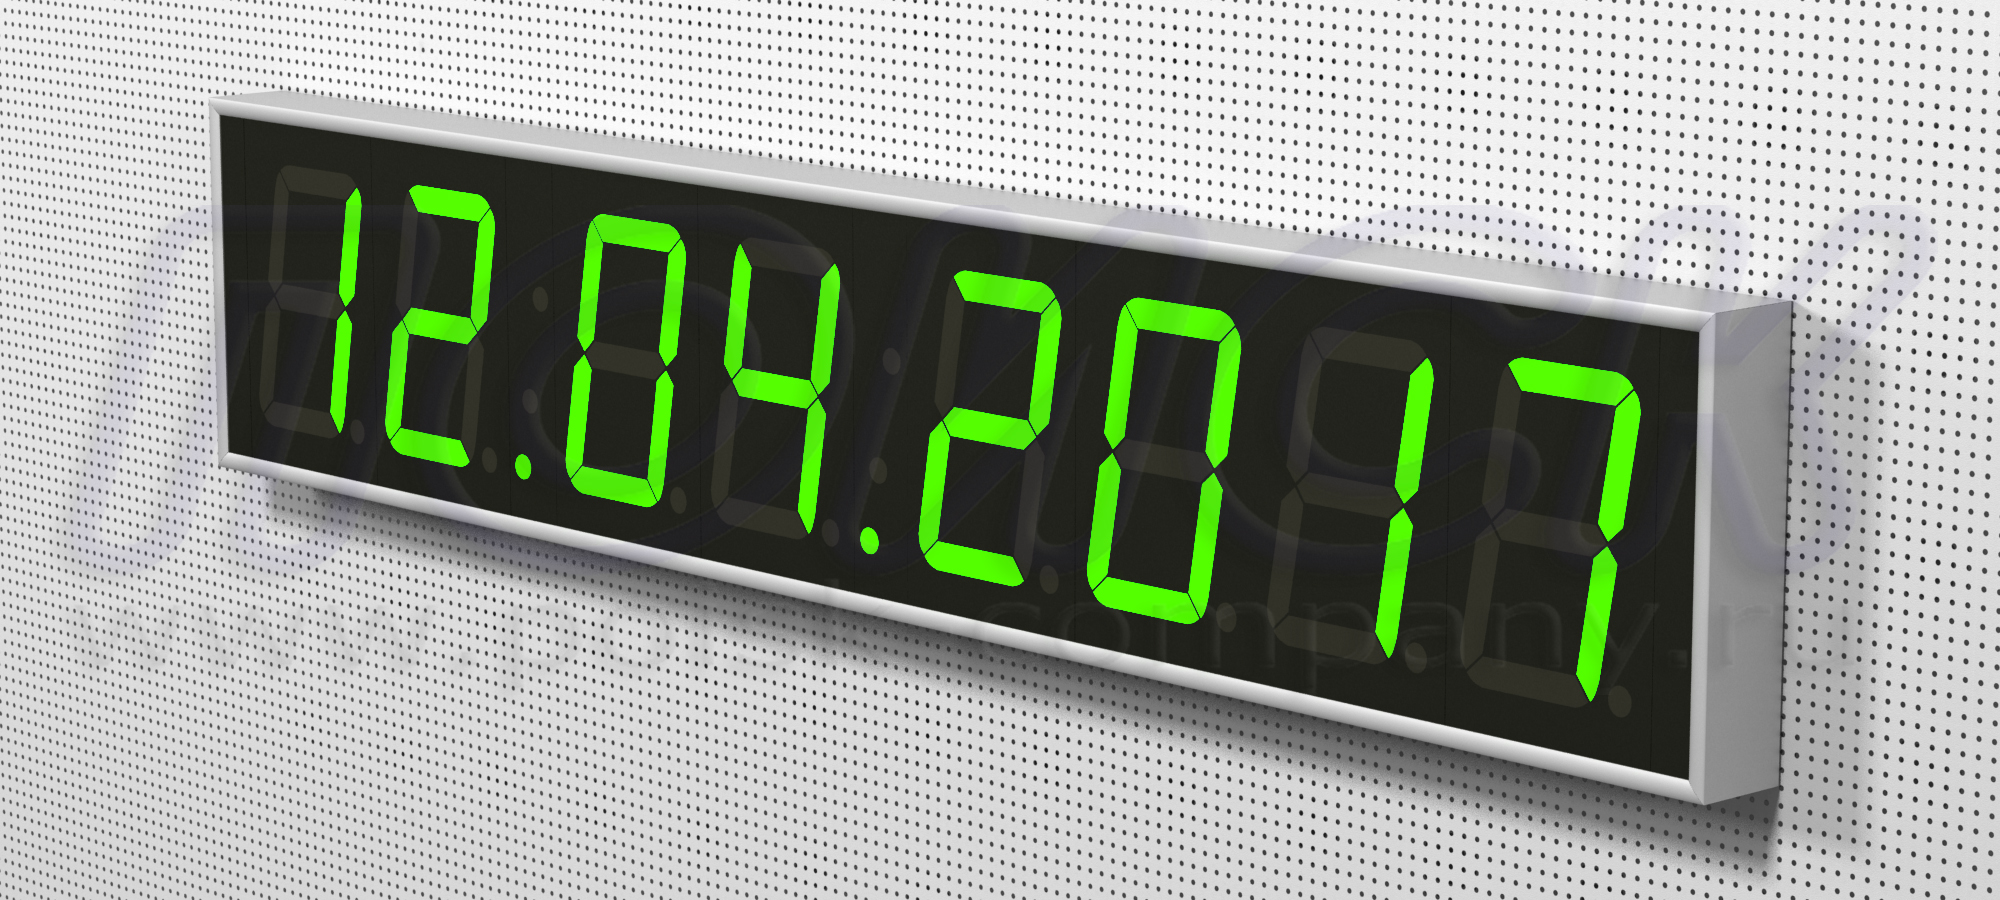 Часы/Календарь; Индикатор времени/даты